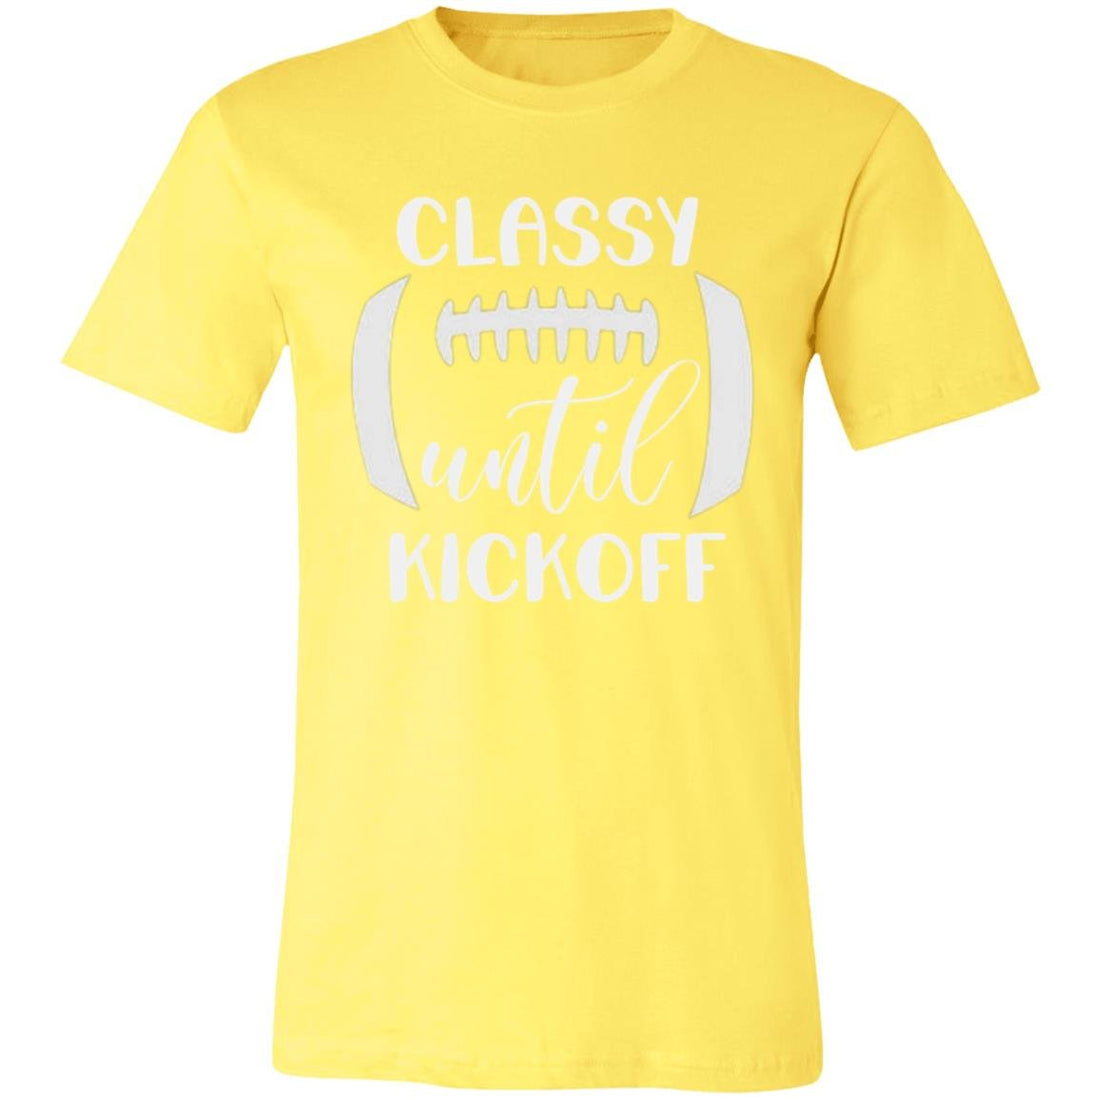 Classy Until Kickoff Short-Sleeve T-Shirt - T-Shirts - Positively Sassy - Classy Until Kickoff Short-Sleeve T-Shirt